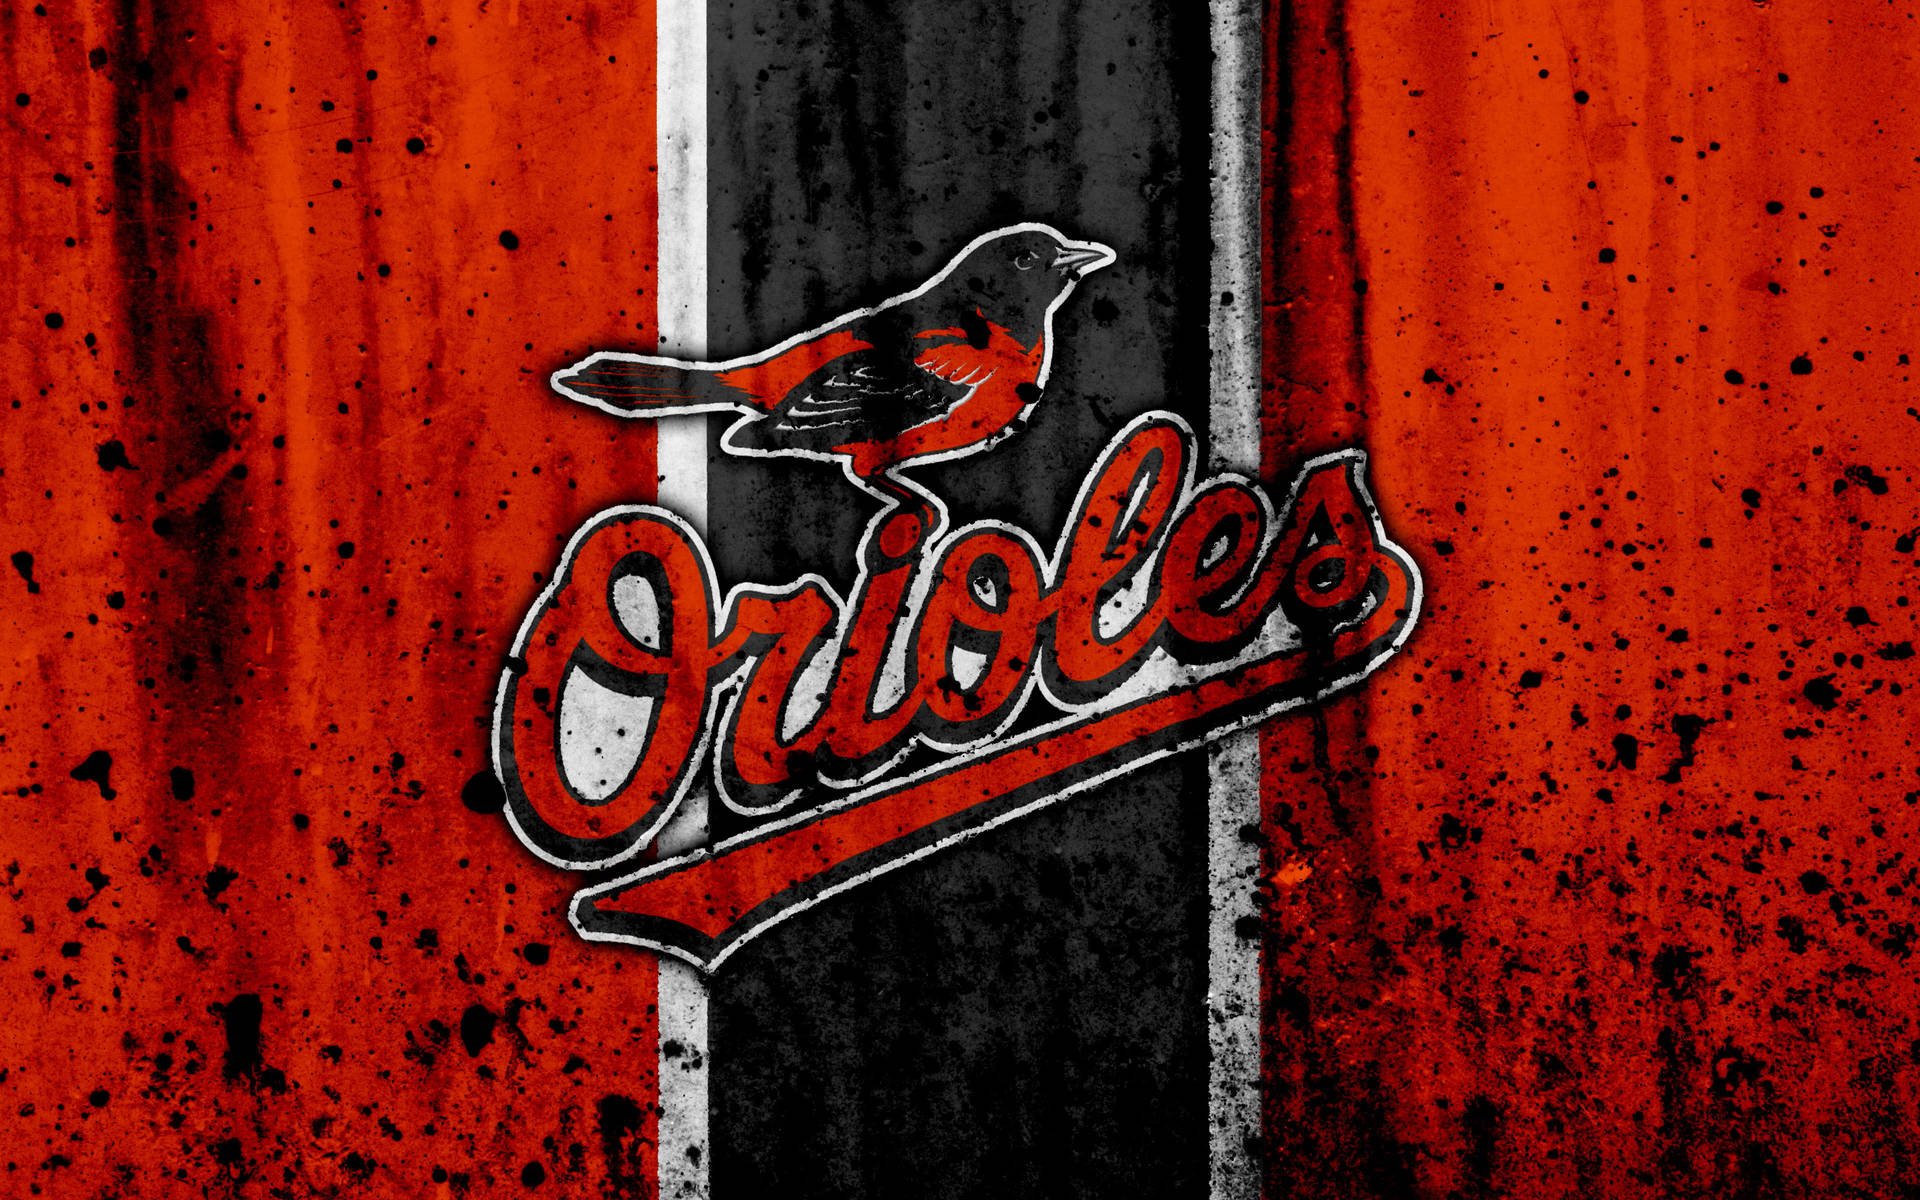 Baltimore Orioles Grunge Stone Background